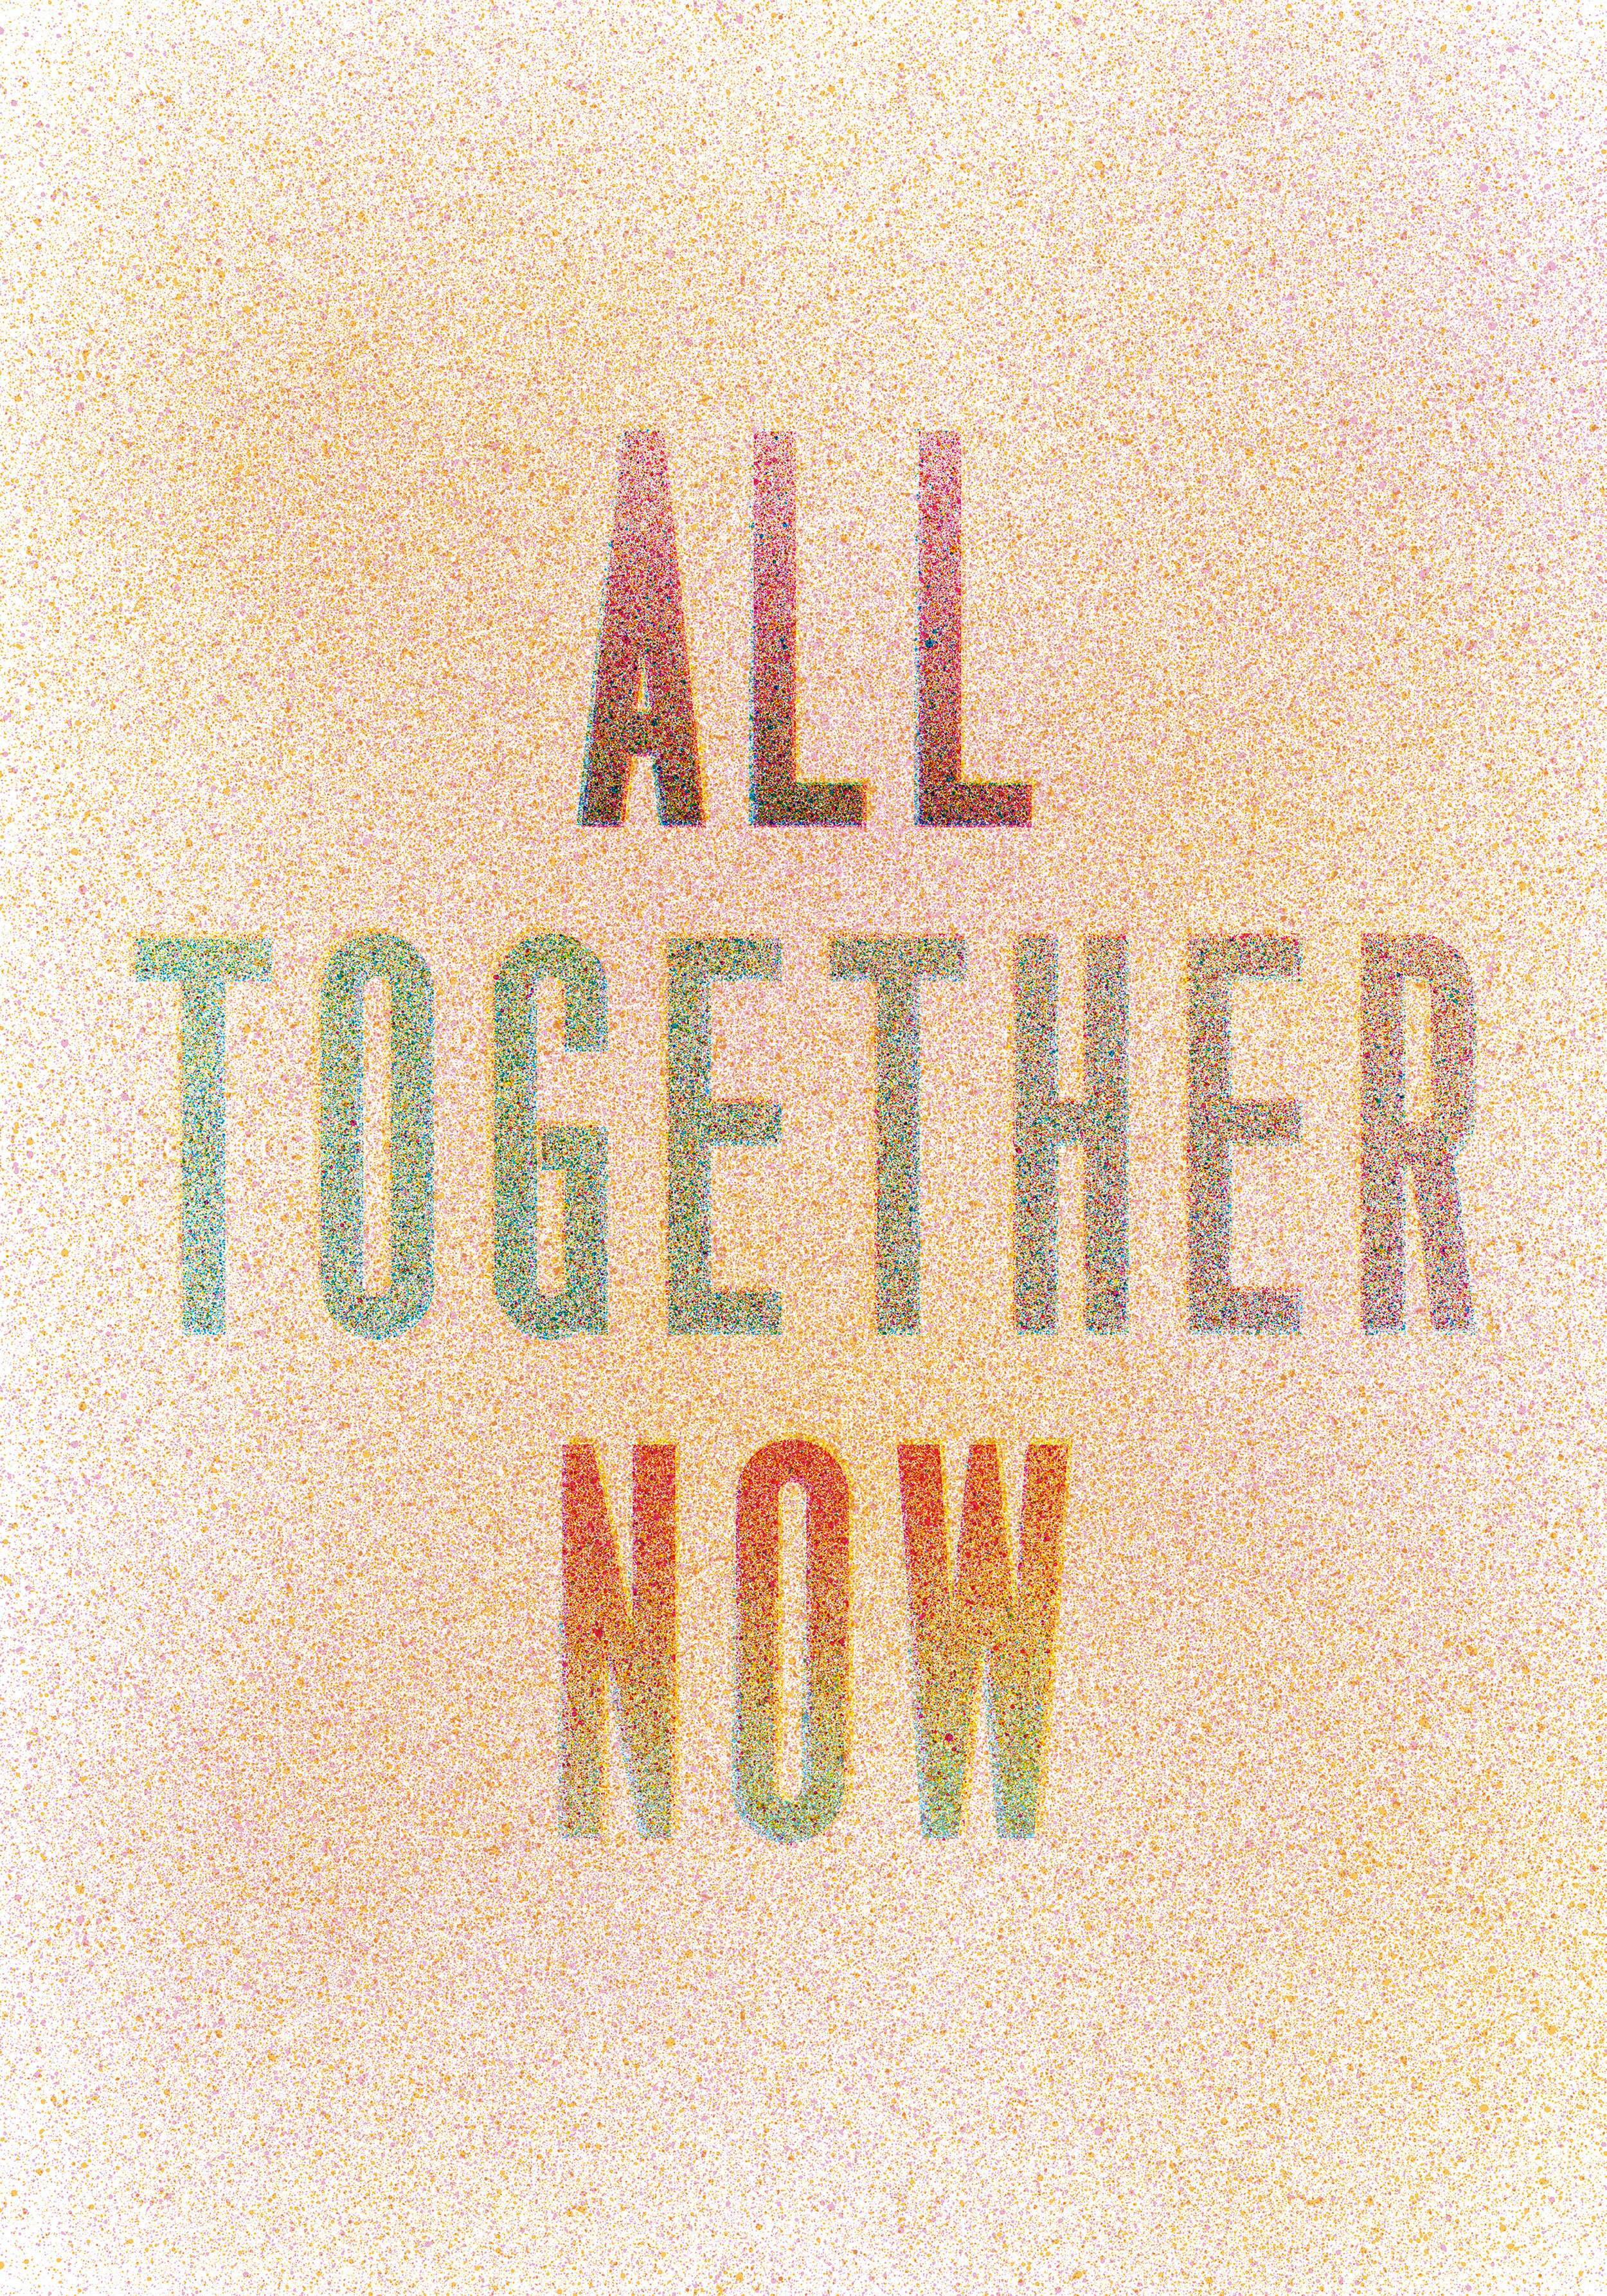 all_together_now_72ppi.jpg